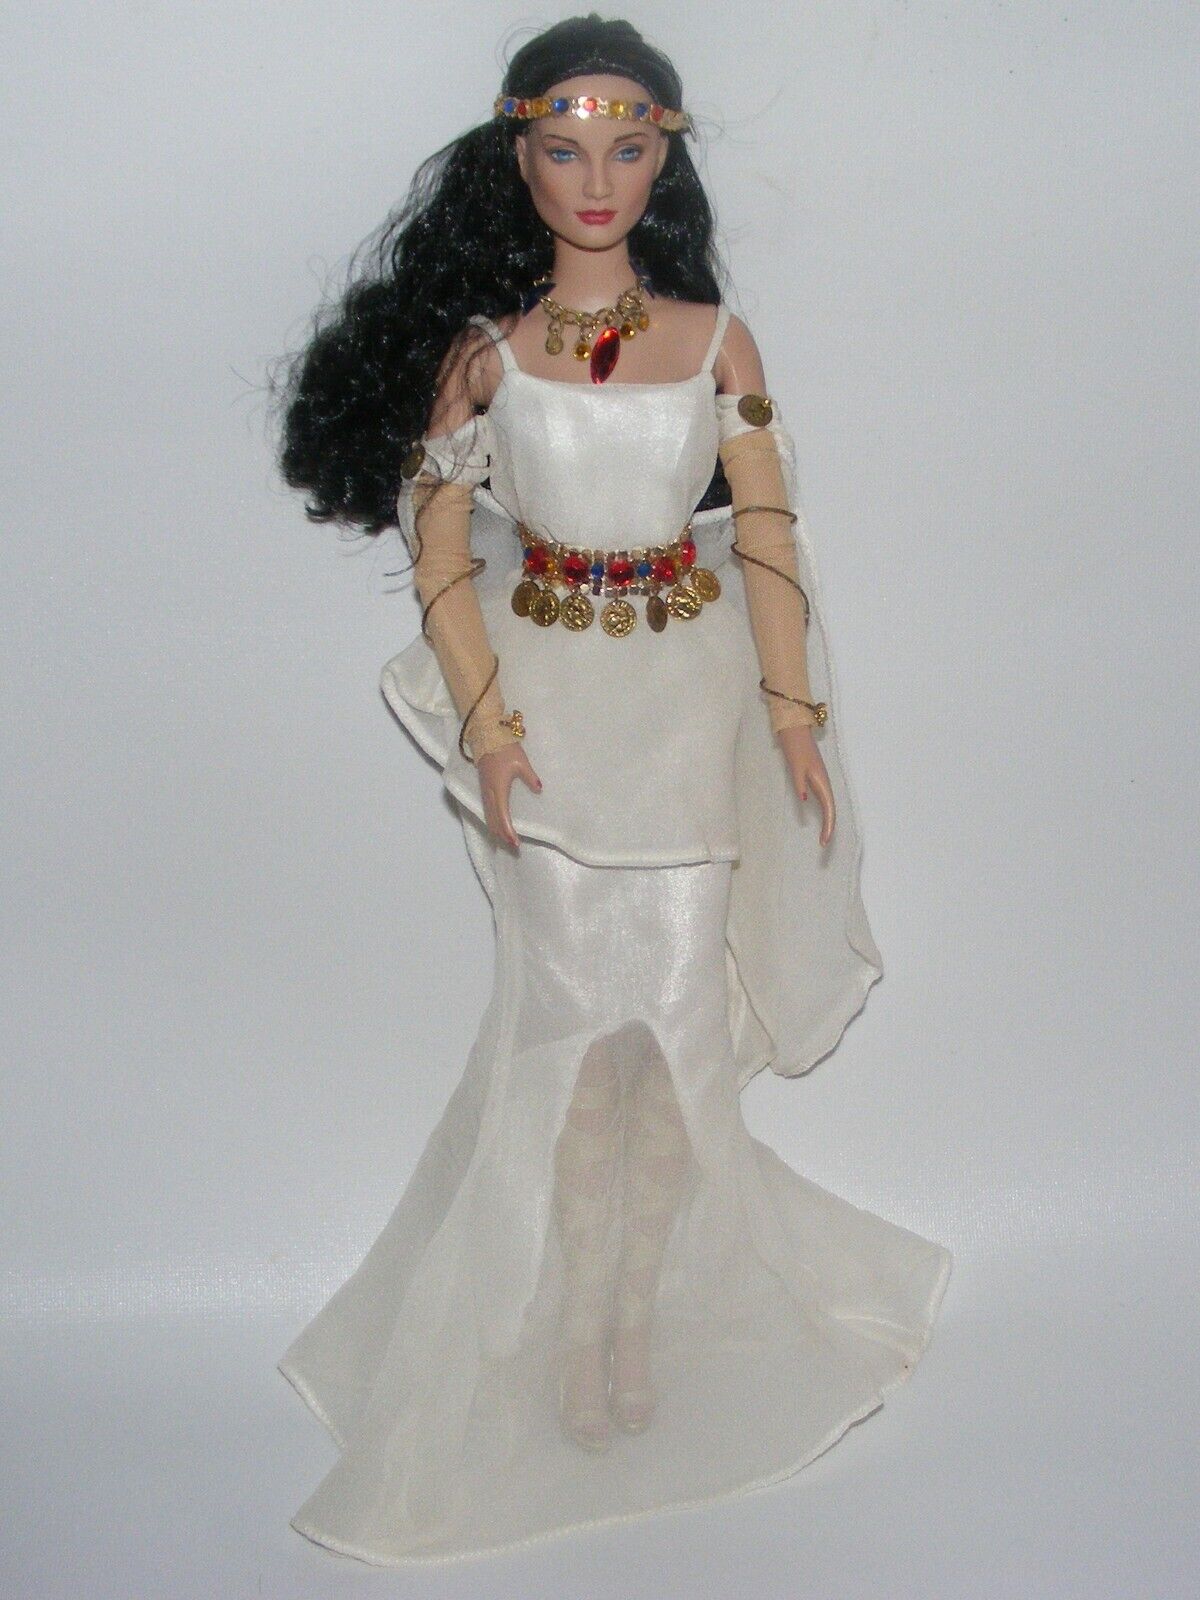 TONNER DC Stars Wonder Woman AMAZON PRINCESS Special Edition doll